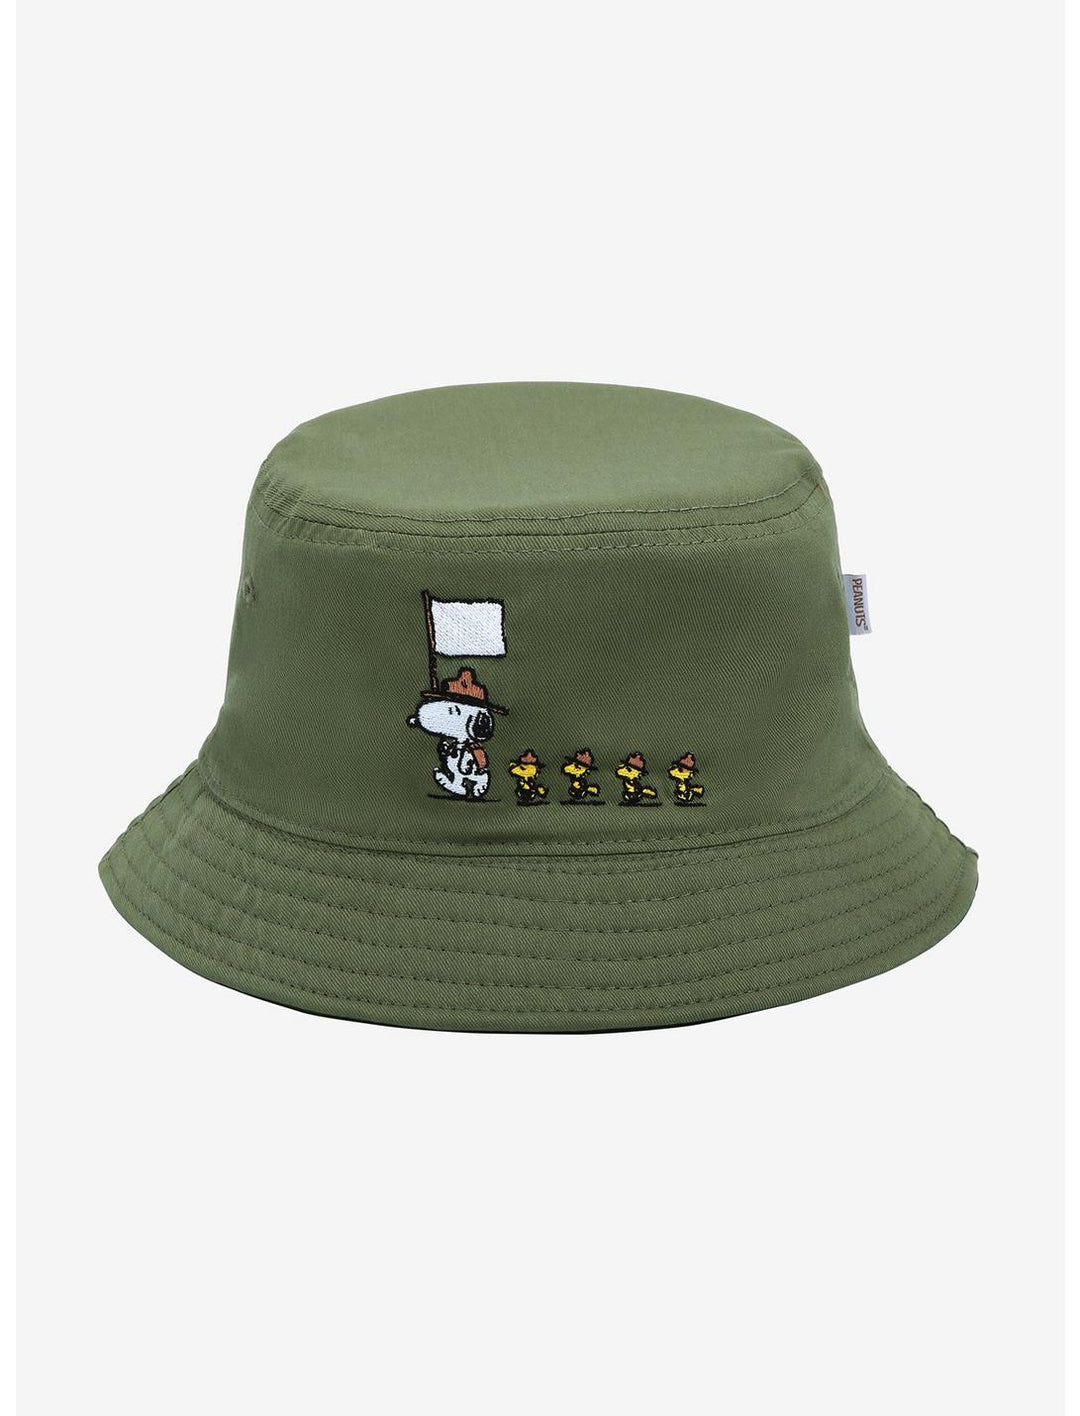 Peanuts Snoopy Green Bucket Hat